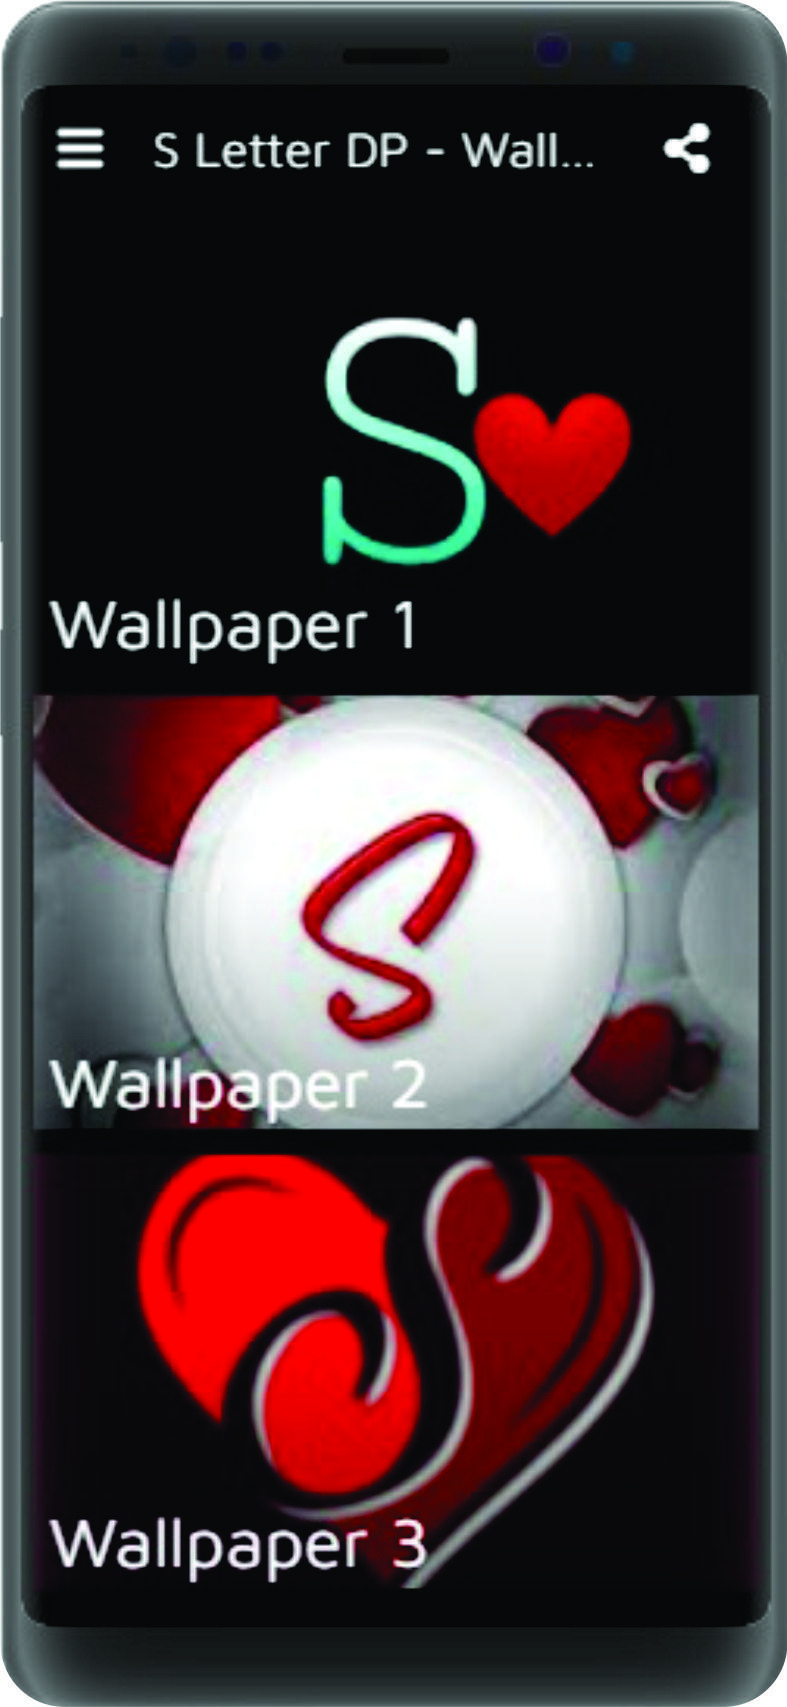 S Letter DP - Wallpapers , Images and Photos APK pour Android Télécharger